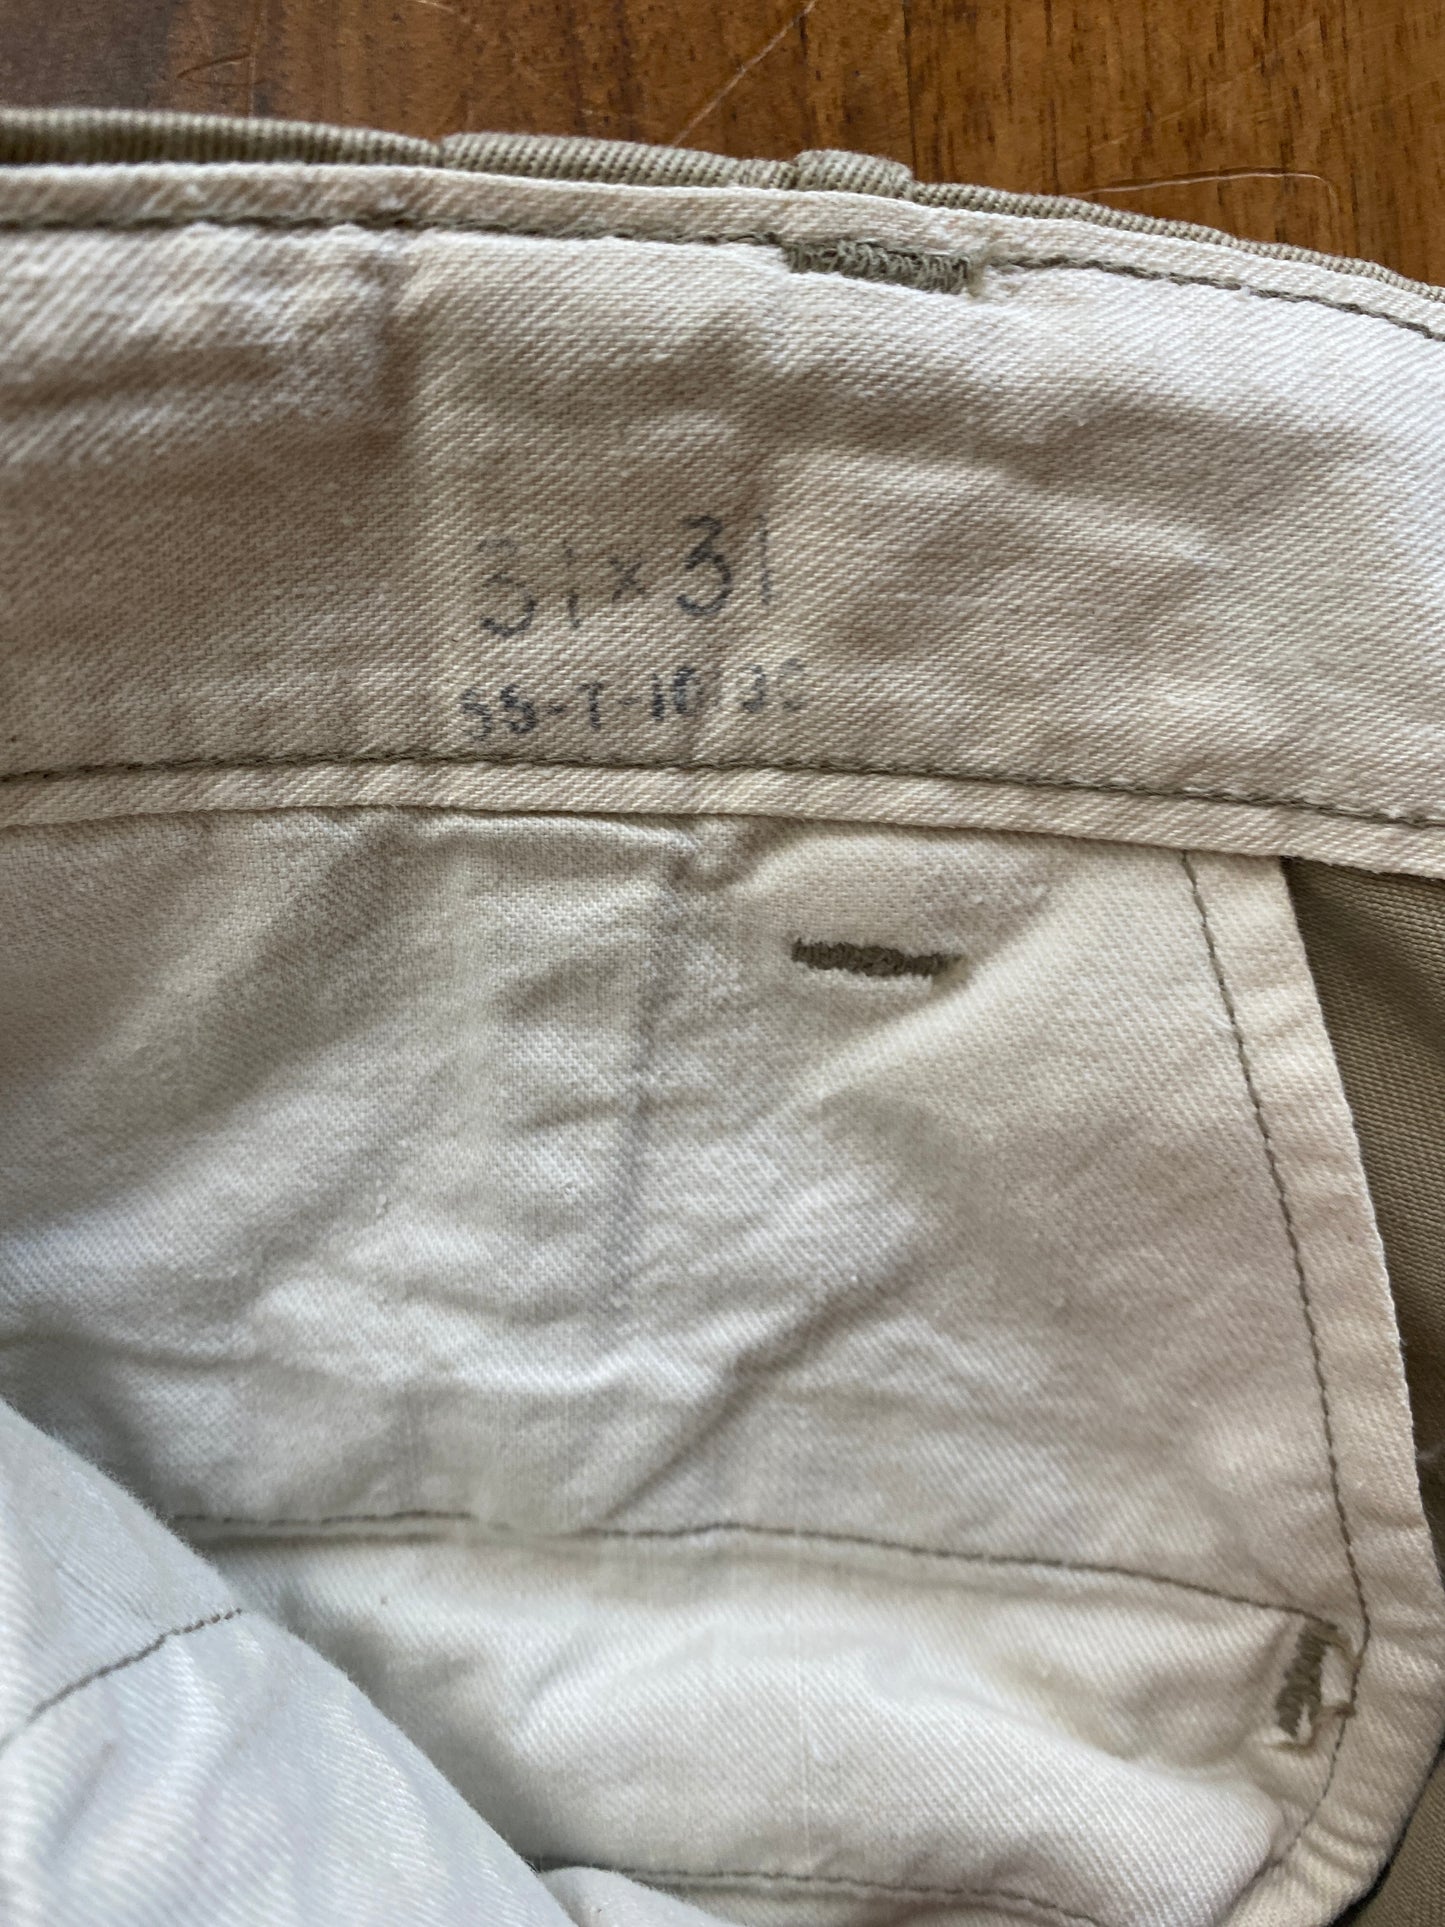 WWII Era Cotton Khaki Trousers Size 29W x 28.5L